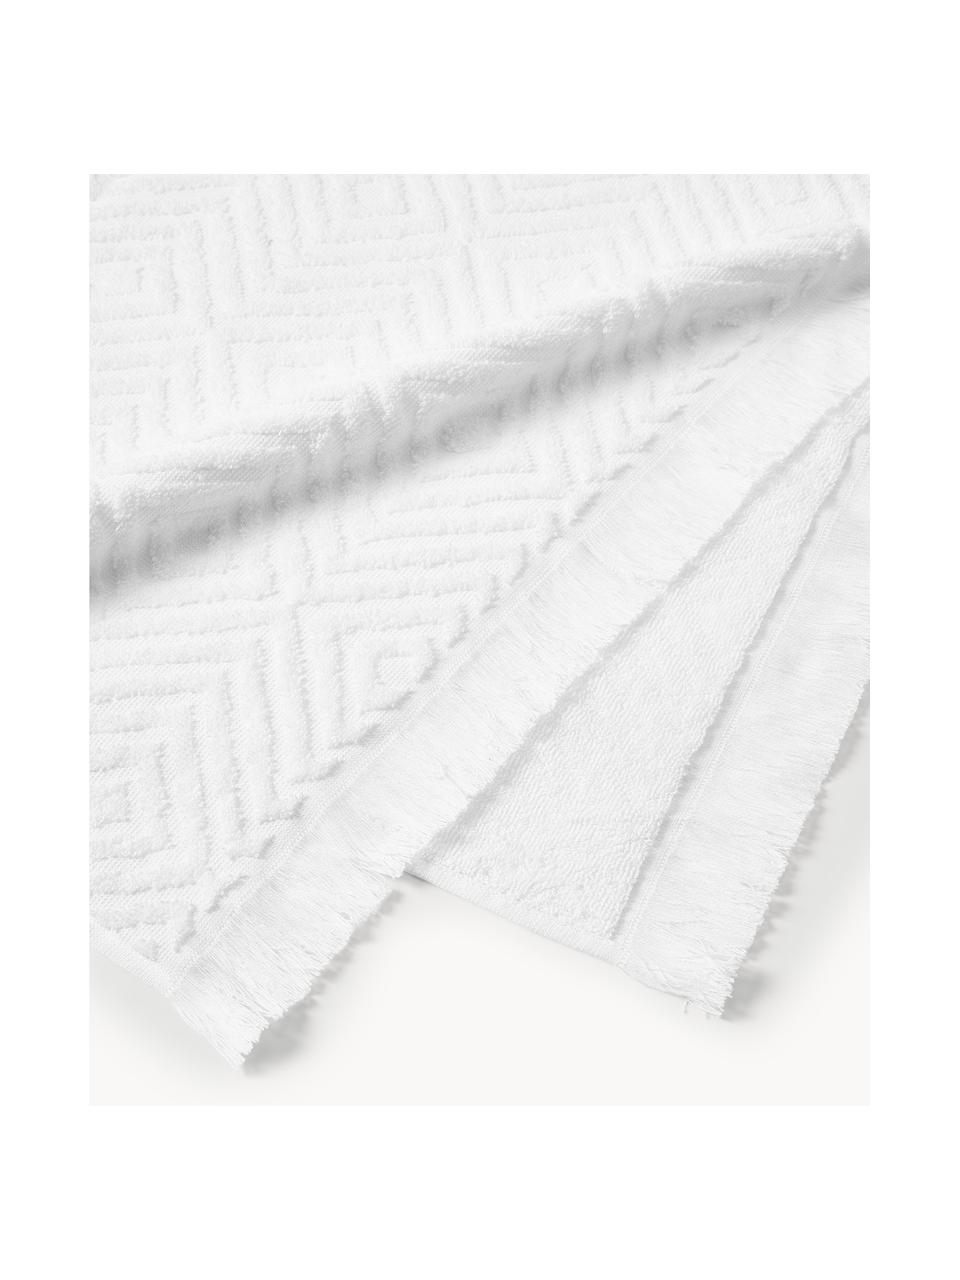 Set de toallas texturizadas Jacqui, tamaños diferentes, Blanco, Set de 4 (toallas lavabo y toallas ducha)